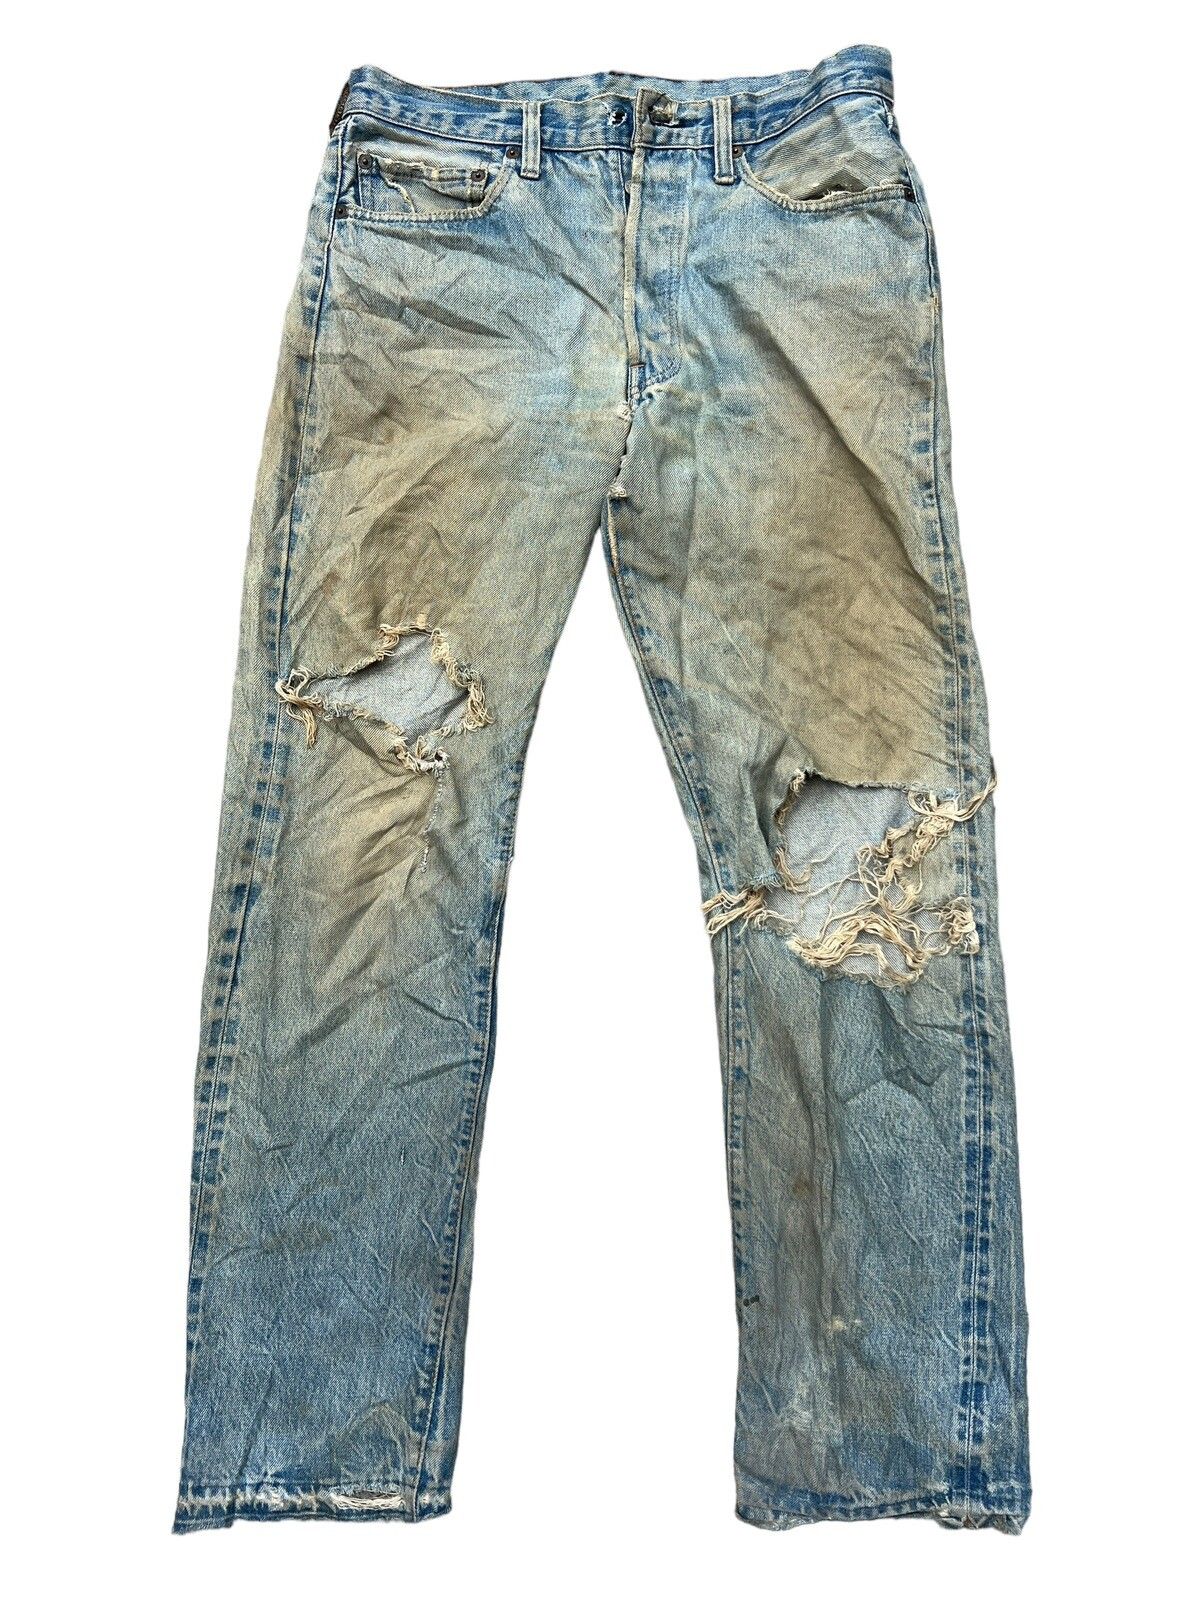 Vintage 70s Levi’s 501 Selvedge Distressed Denim Jeans 32x31 - 1